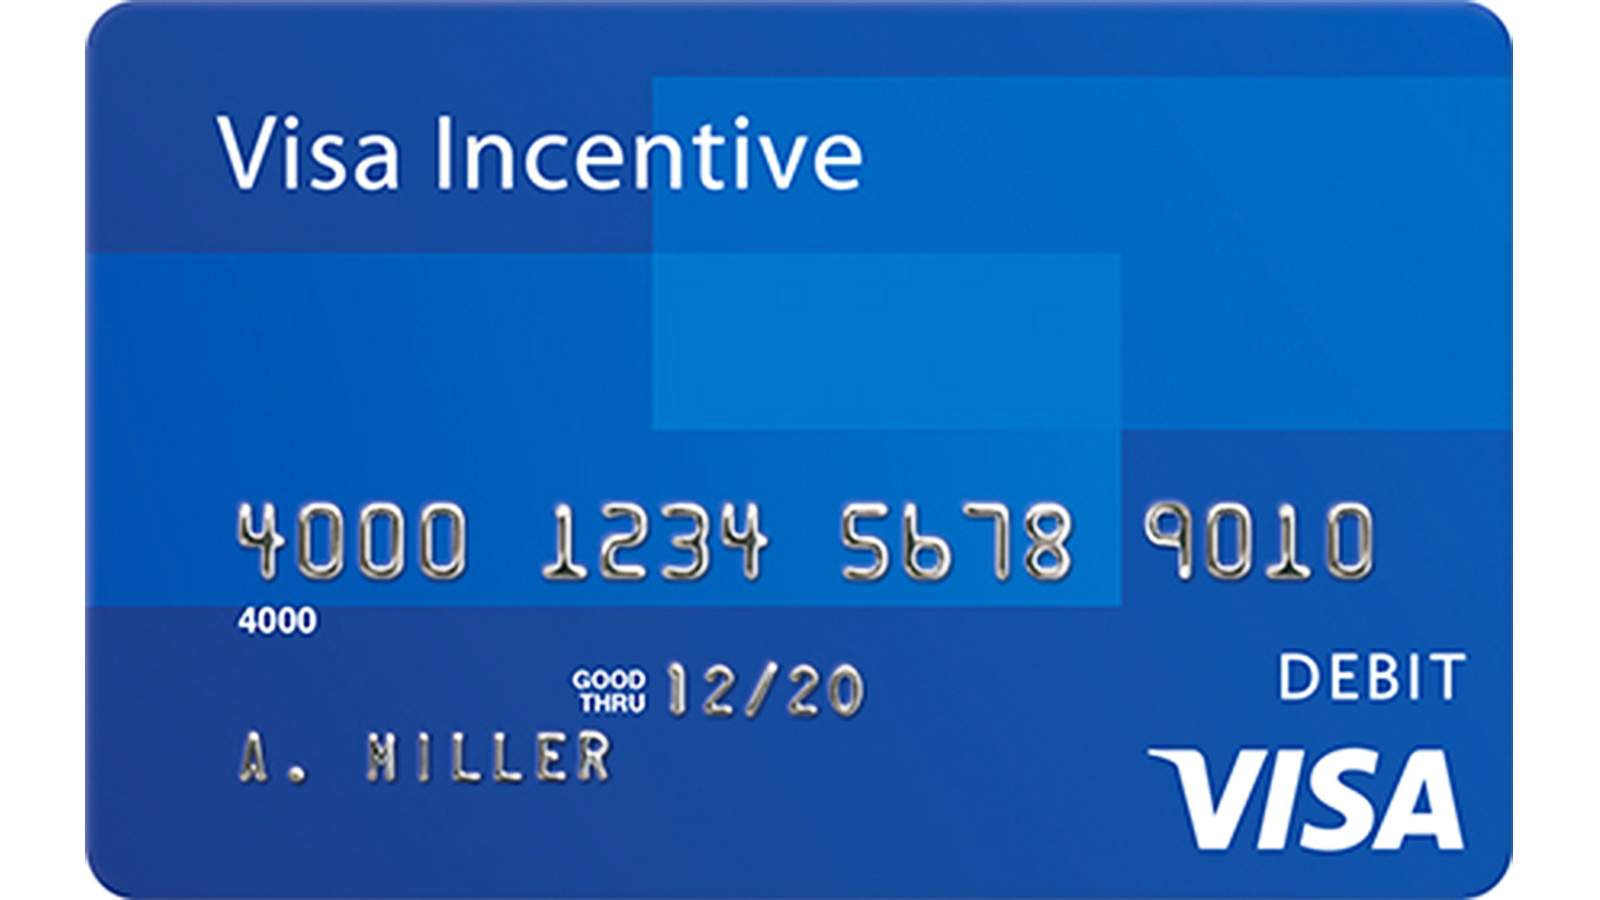 Enterprise + Government Prepaid Cards Visa